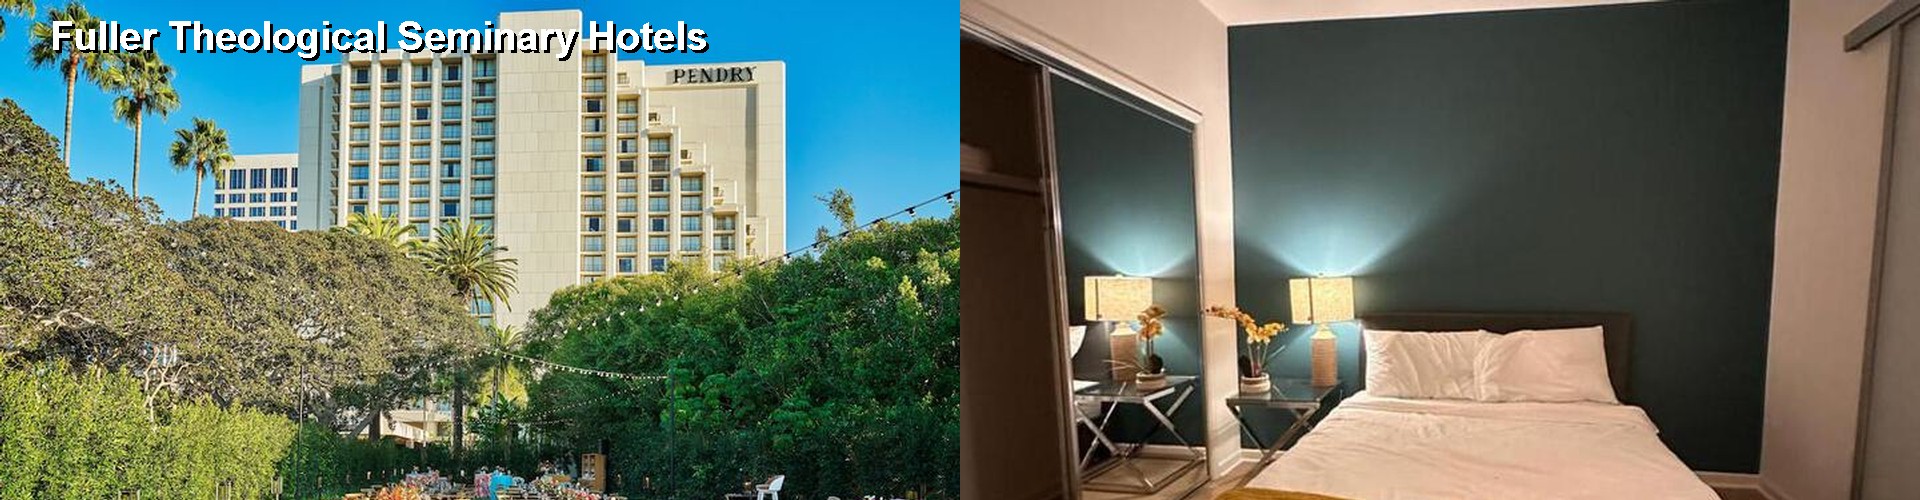 5 Best Hotels near Fuller Theological Seminary